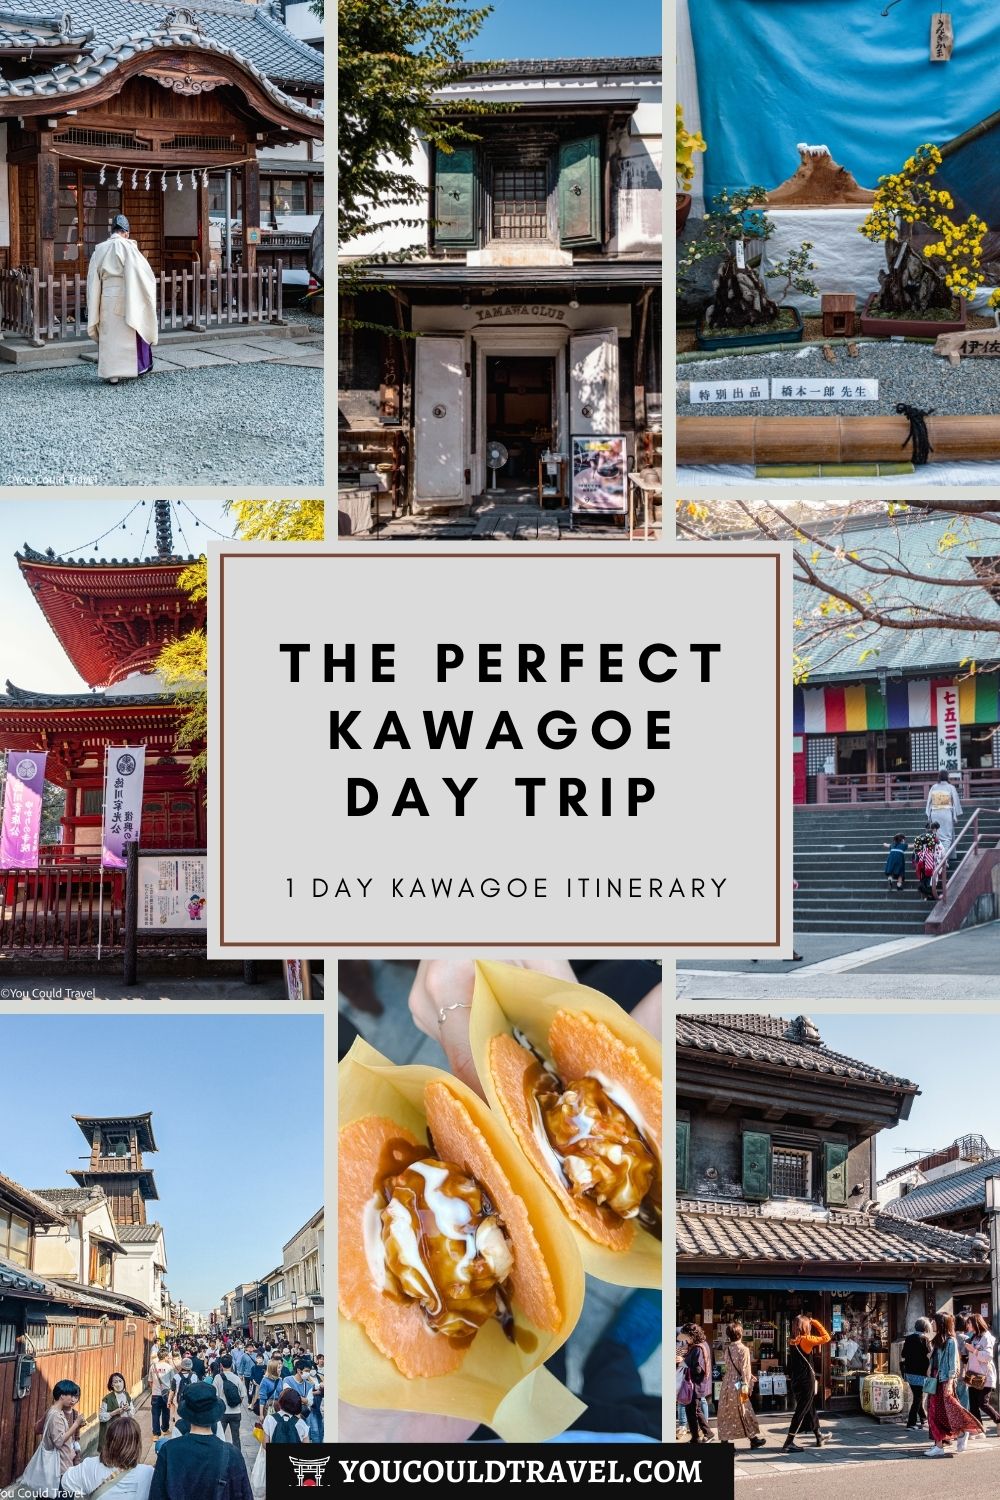 An epic day trip to Kawagoe